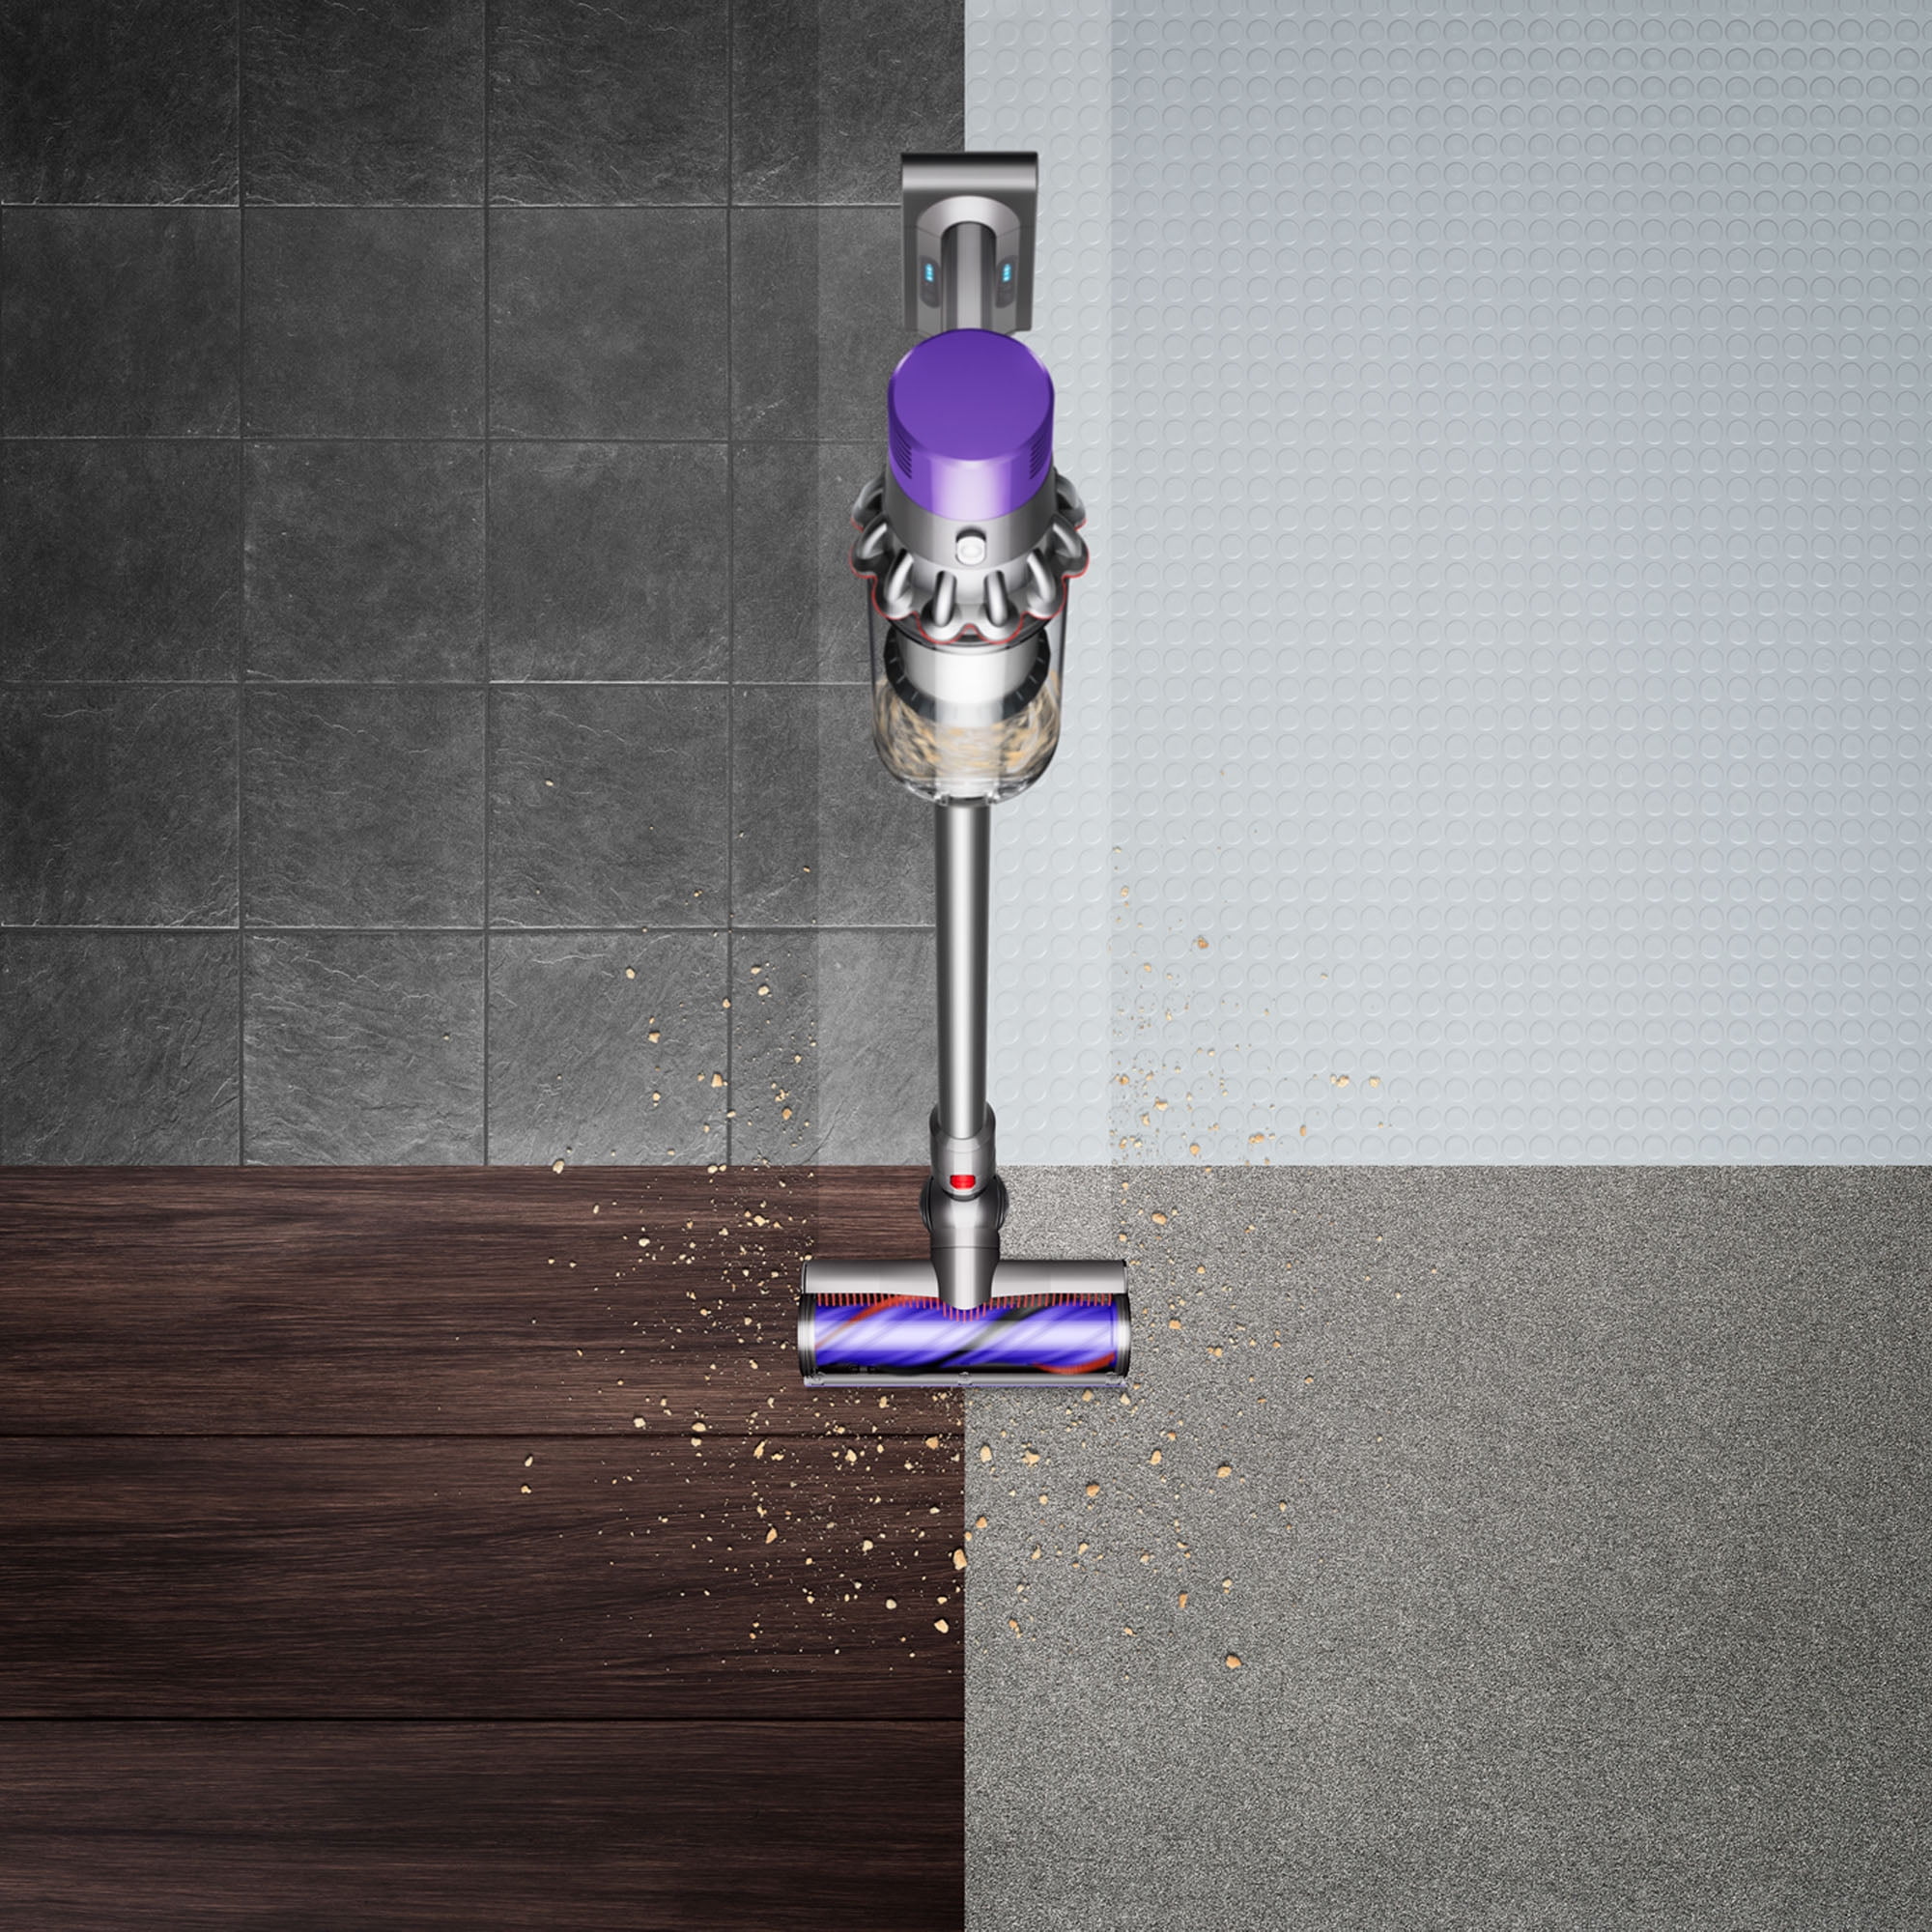 Dyson V10 Animal Cordless Vacuum Cleaner, Iron